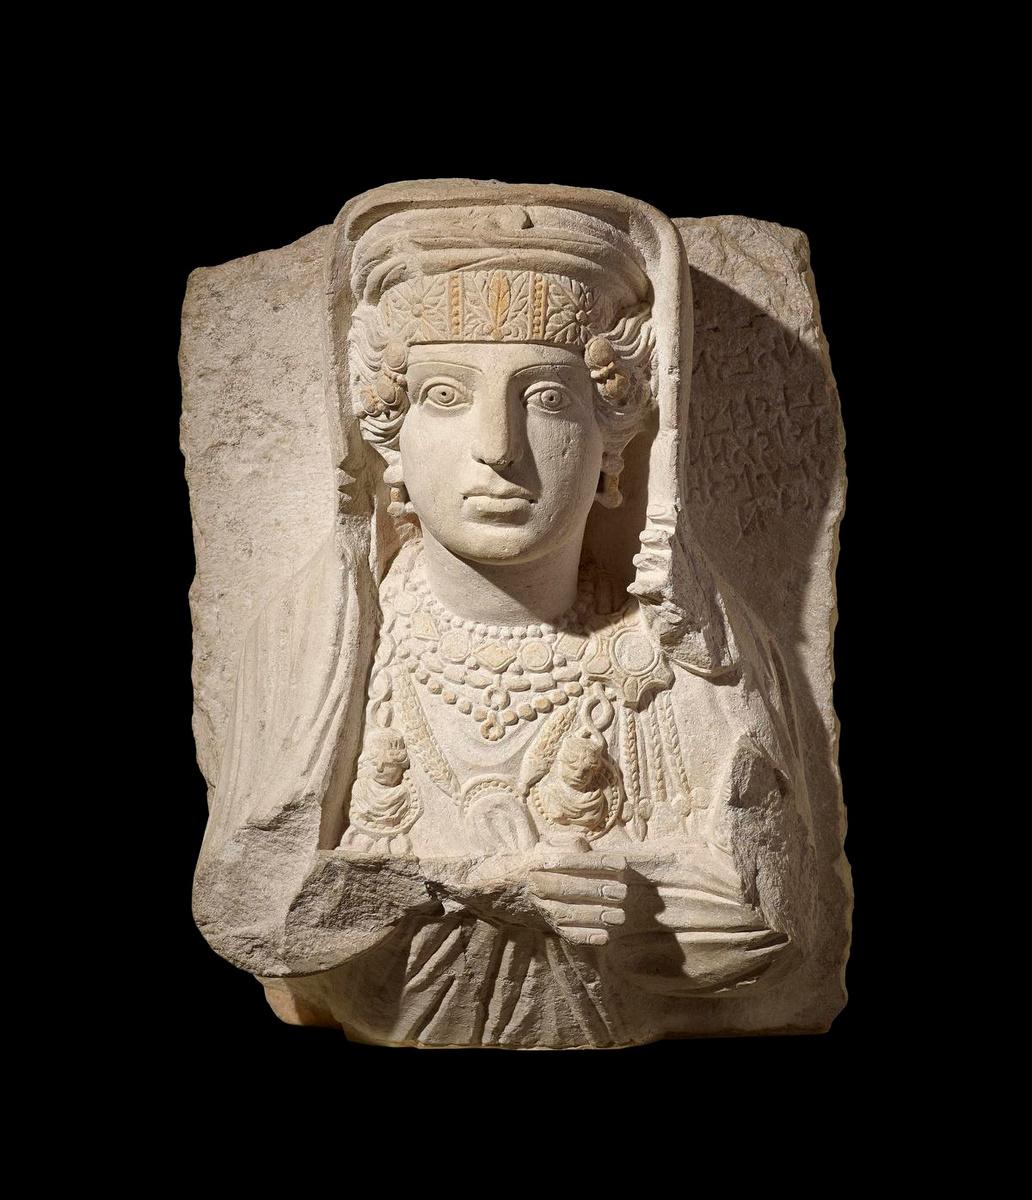 Grafreliëf met buste van een vrouwKalksteen, 200-273 n.Chr., Tadmoer, het Romeinse Palmyra (Syrië)